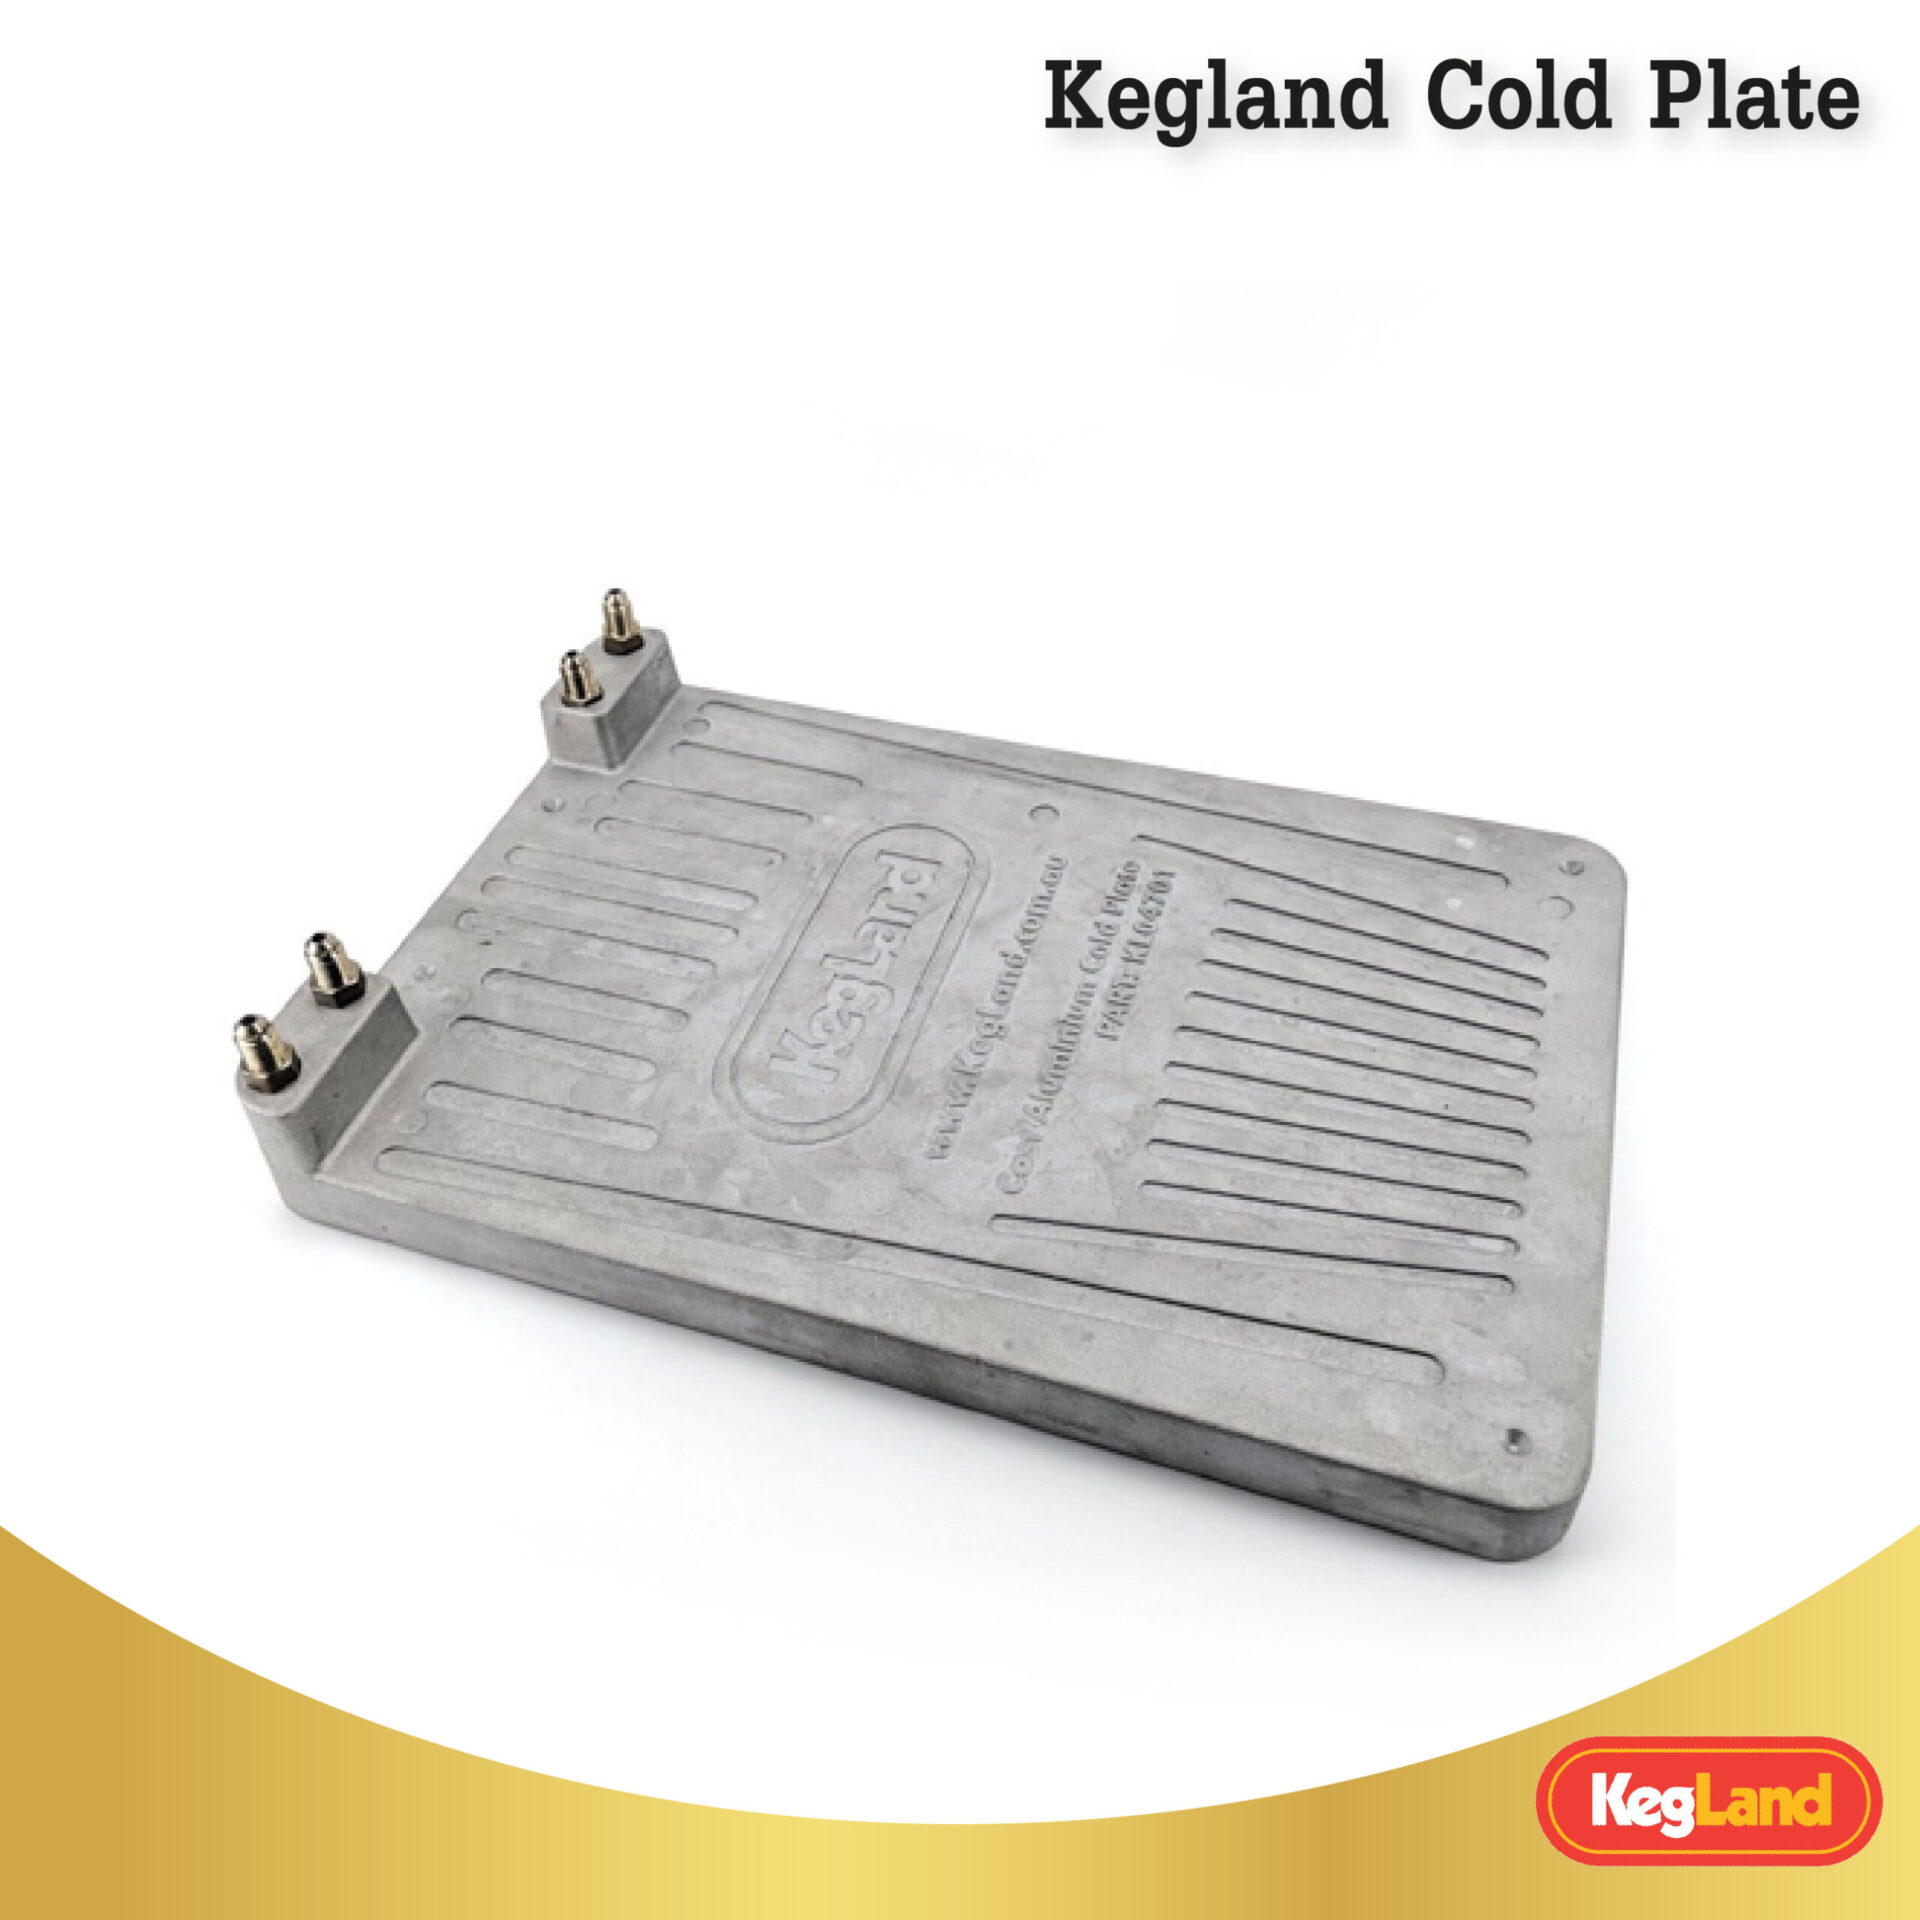 Kegland Cold Plate 01